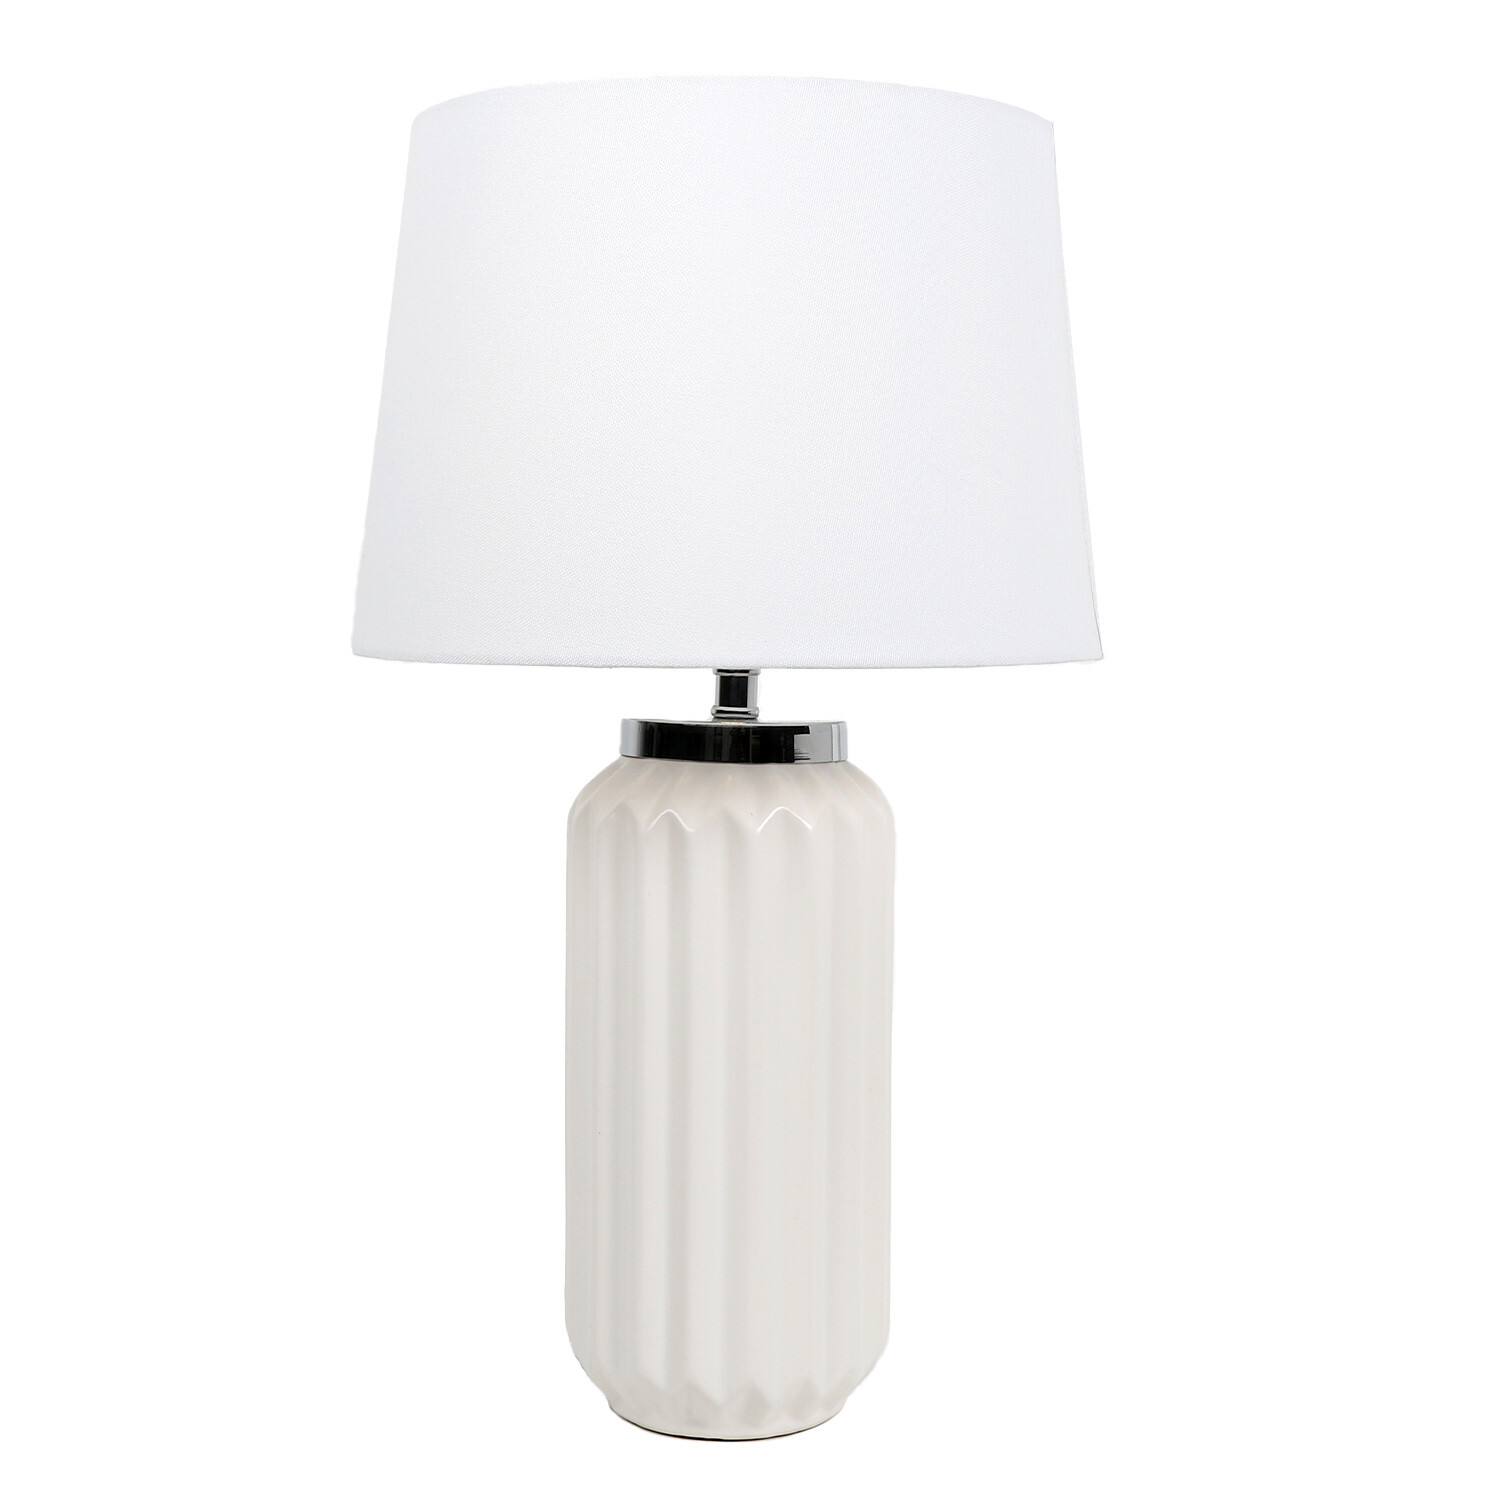 Belle Table Lamp - White Image 1